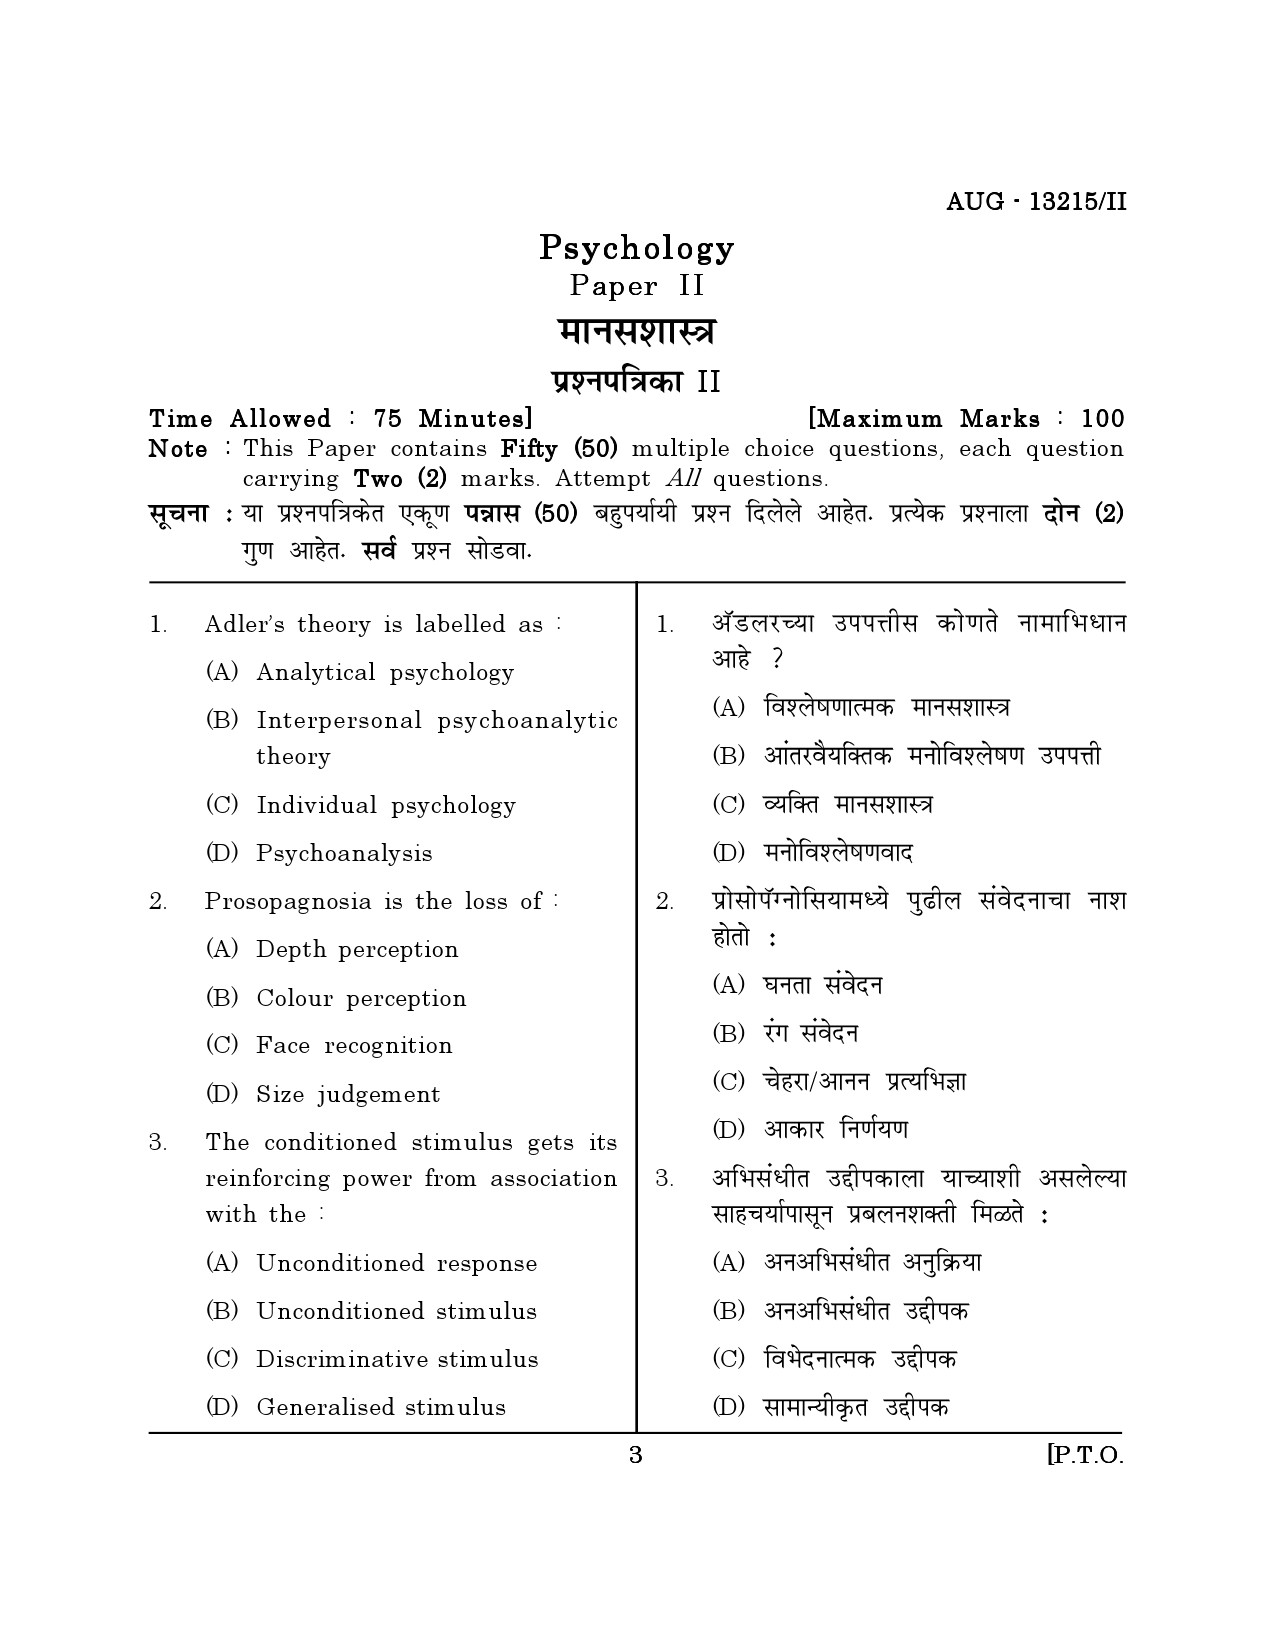 Maharashtra SET Psychology Question Paper II August 2015 2